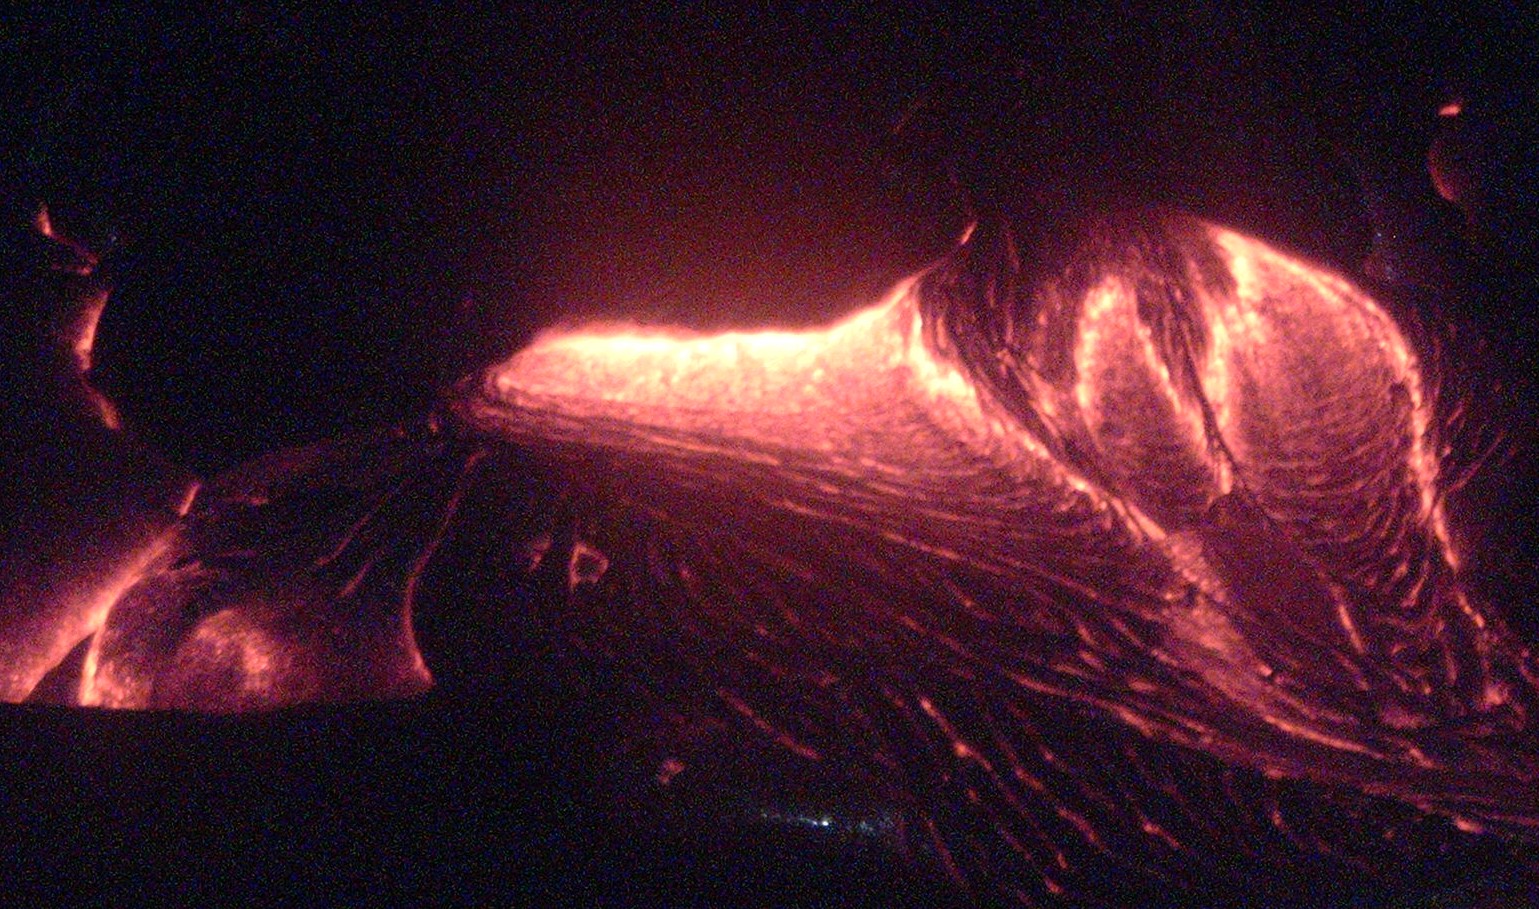 night lava 2.JPG